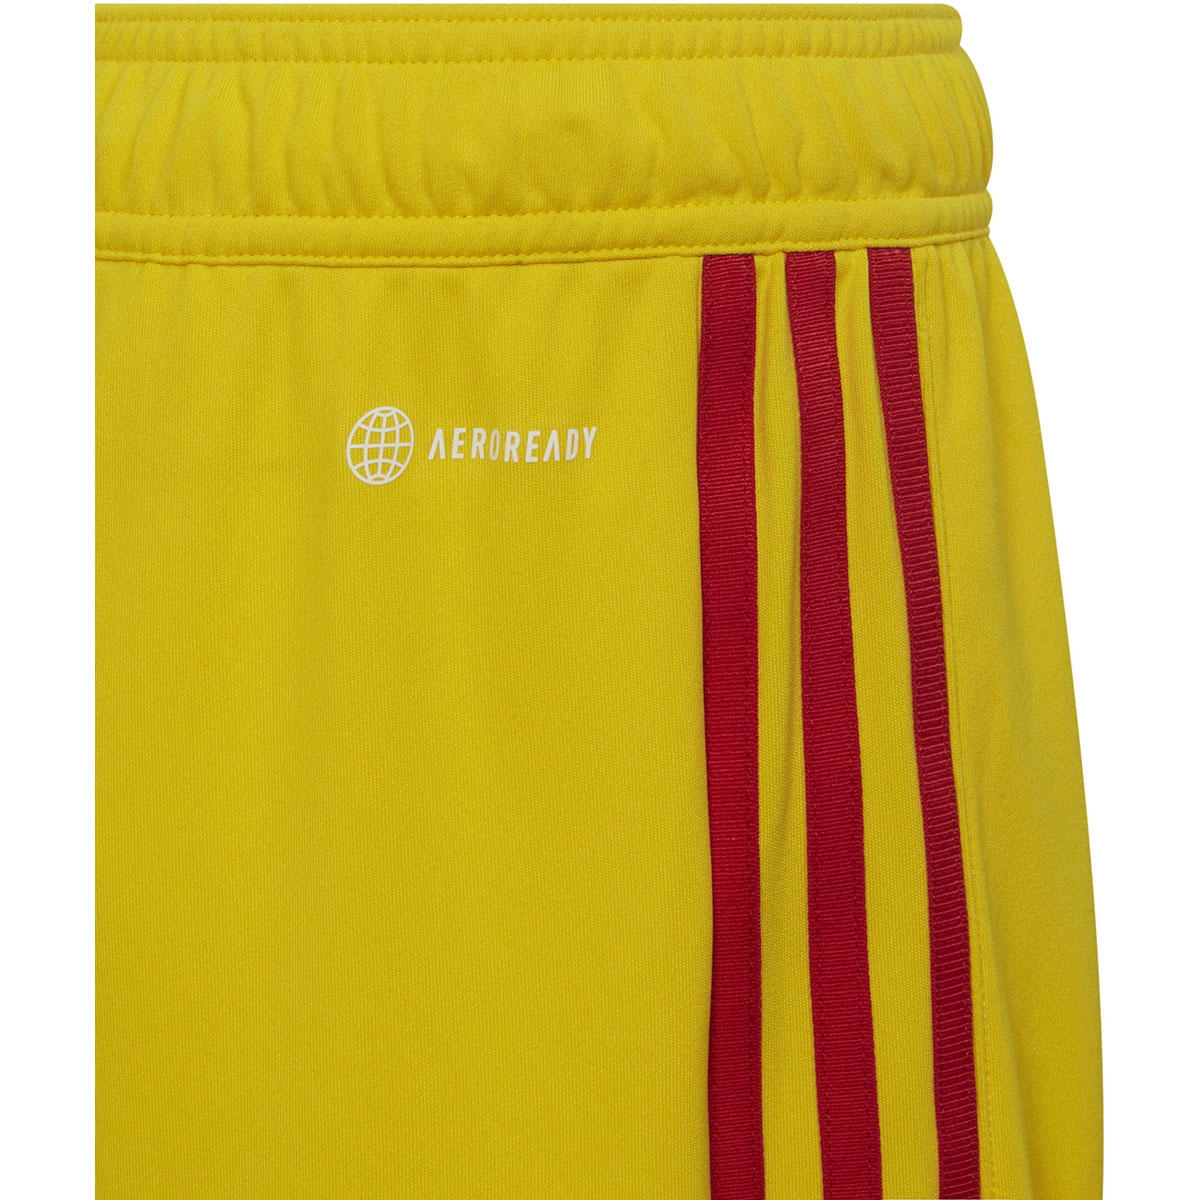 Adidas Kinder Shorts Tiro 23 gelb-rot